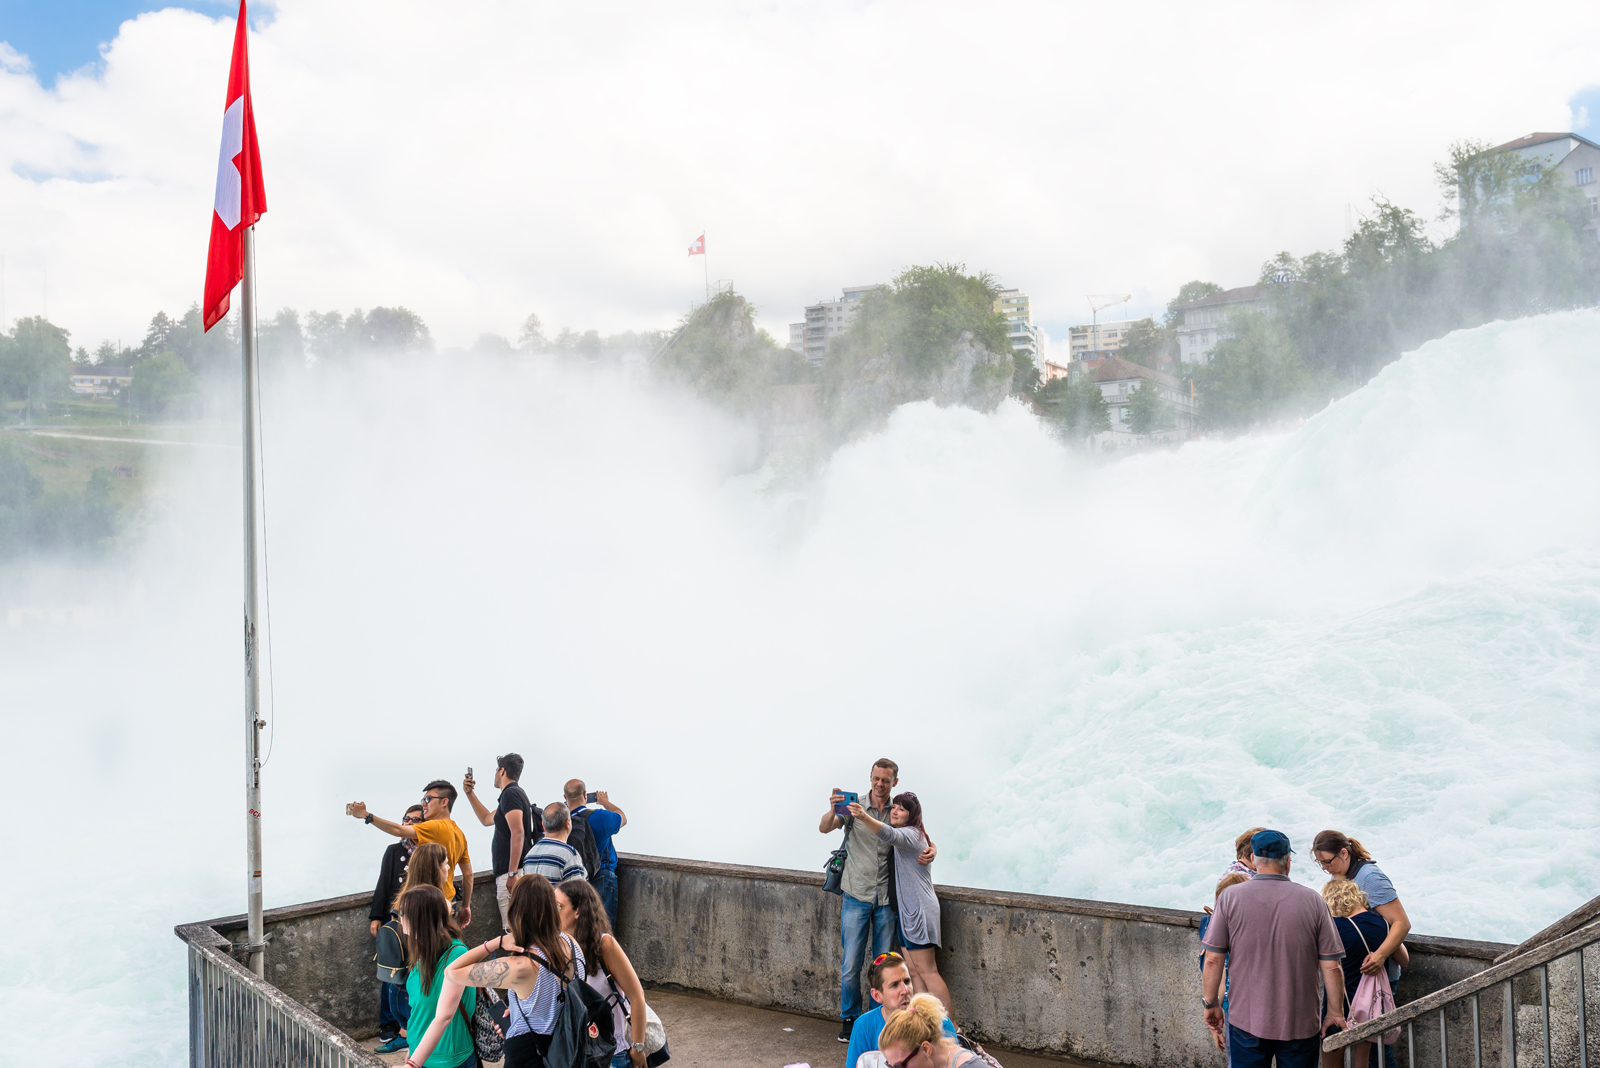 The tumult of the Rhine Falls. Photo @kinek00 via Twenty20